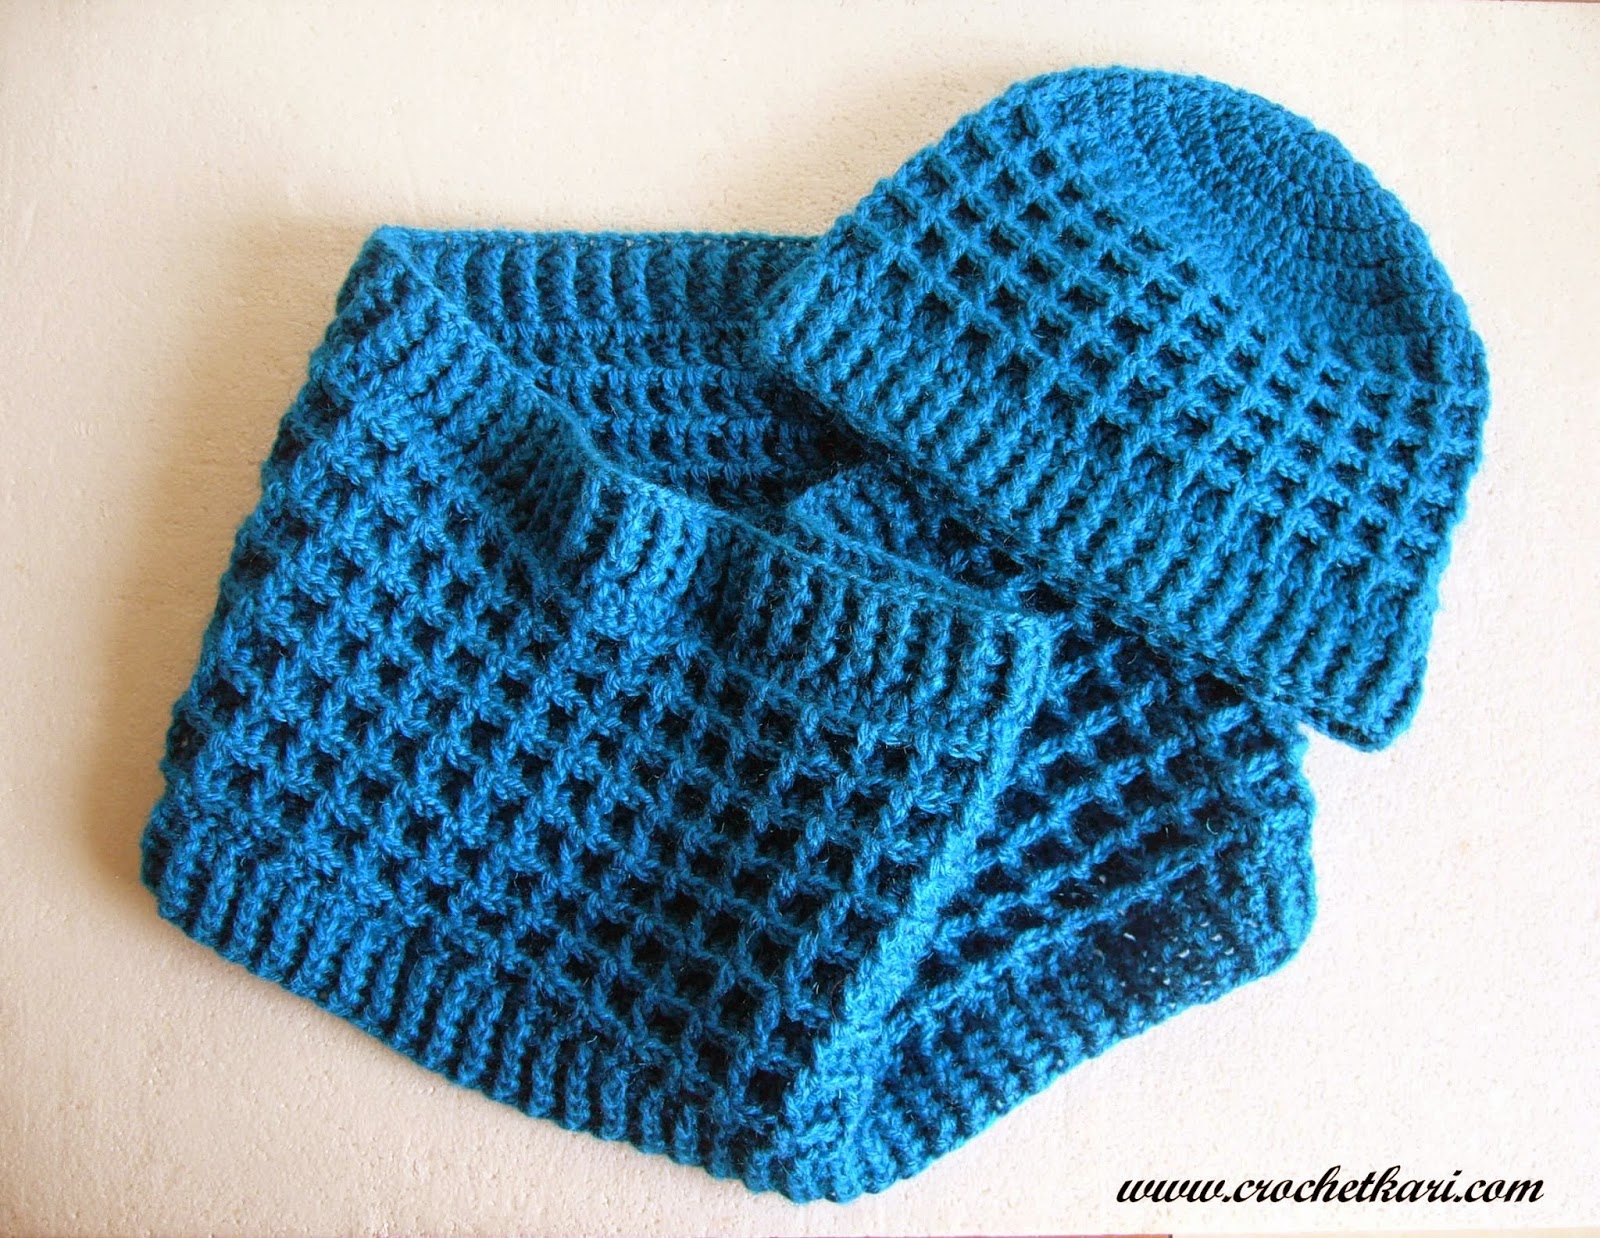 Crochet waffle stitch scarf